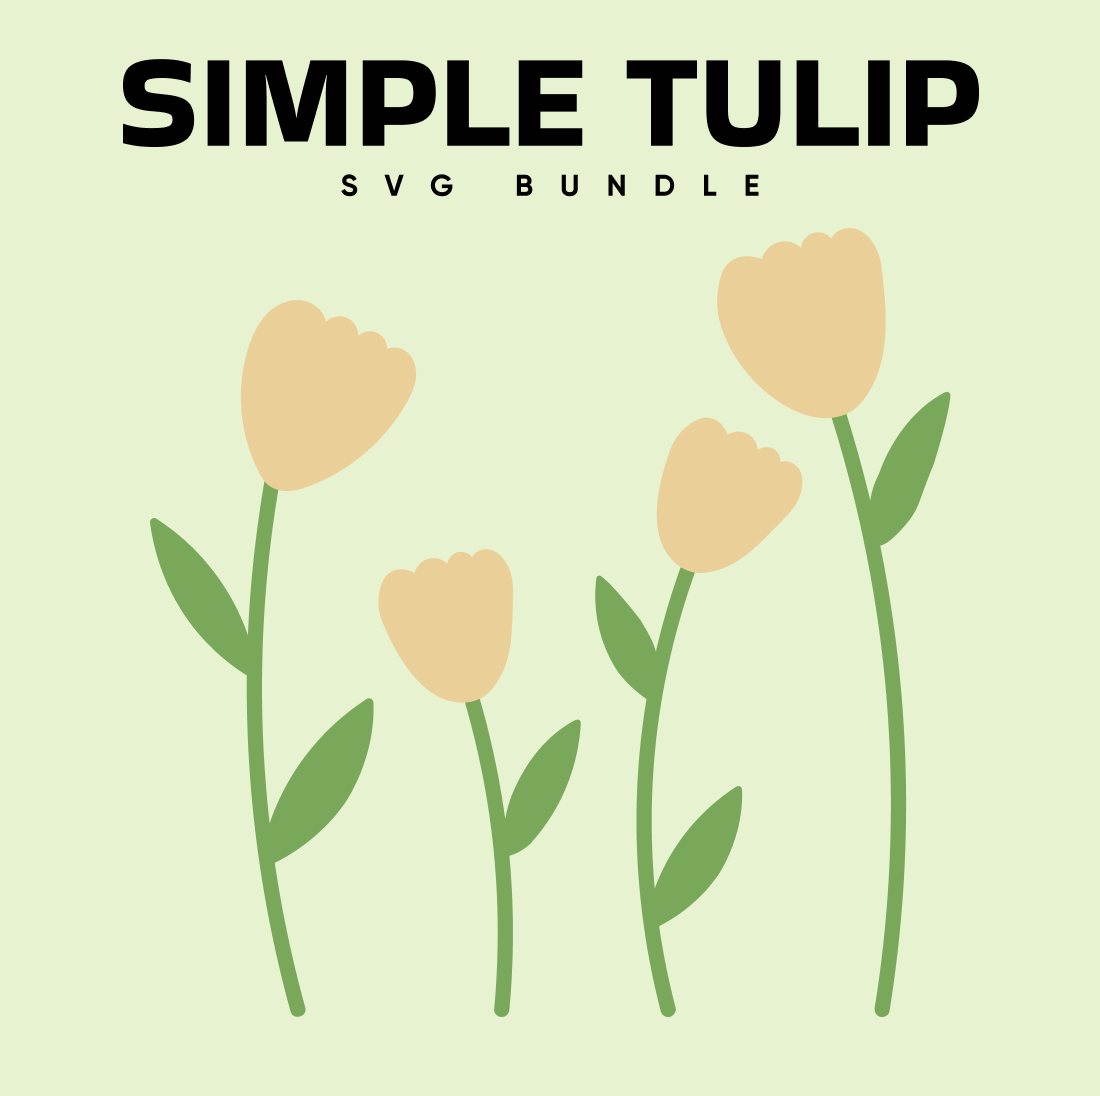 Simple Tulip SVG Bundle, main picture 1100x1100.